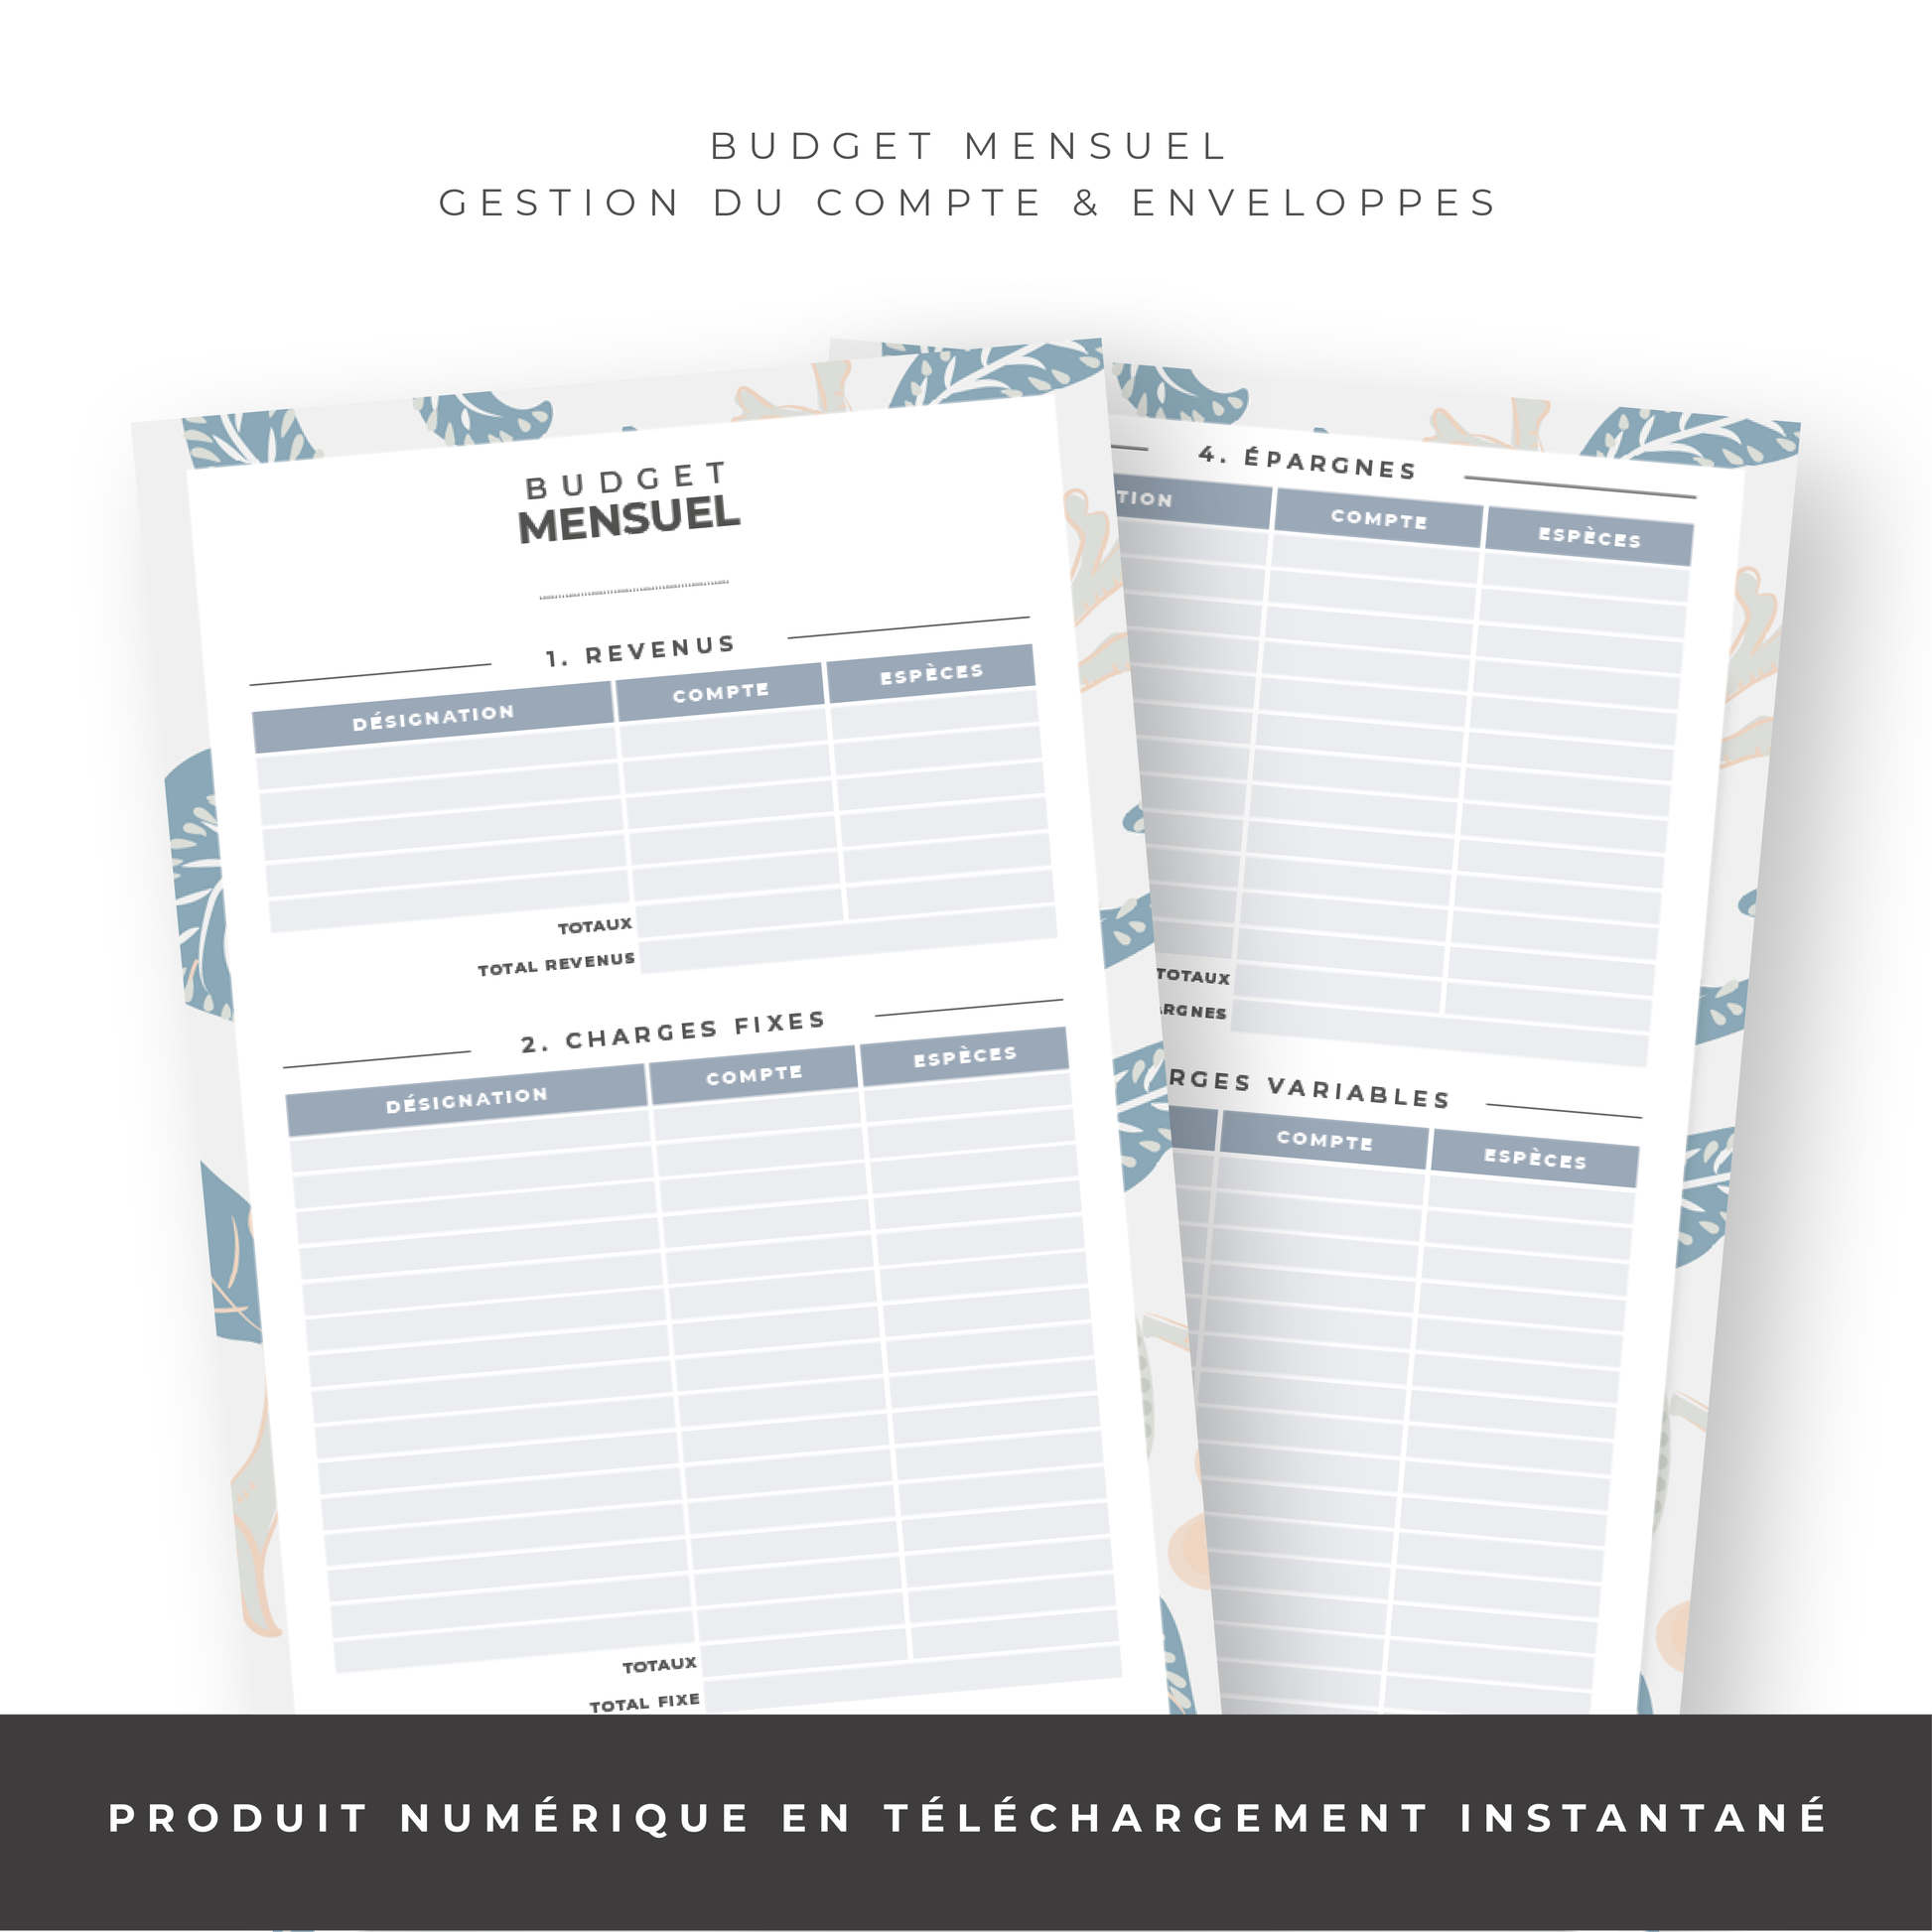 Kit Budget Planner Mini A6 - Floral (digital) – Budget Diary